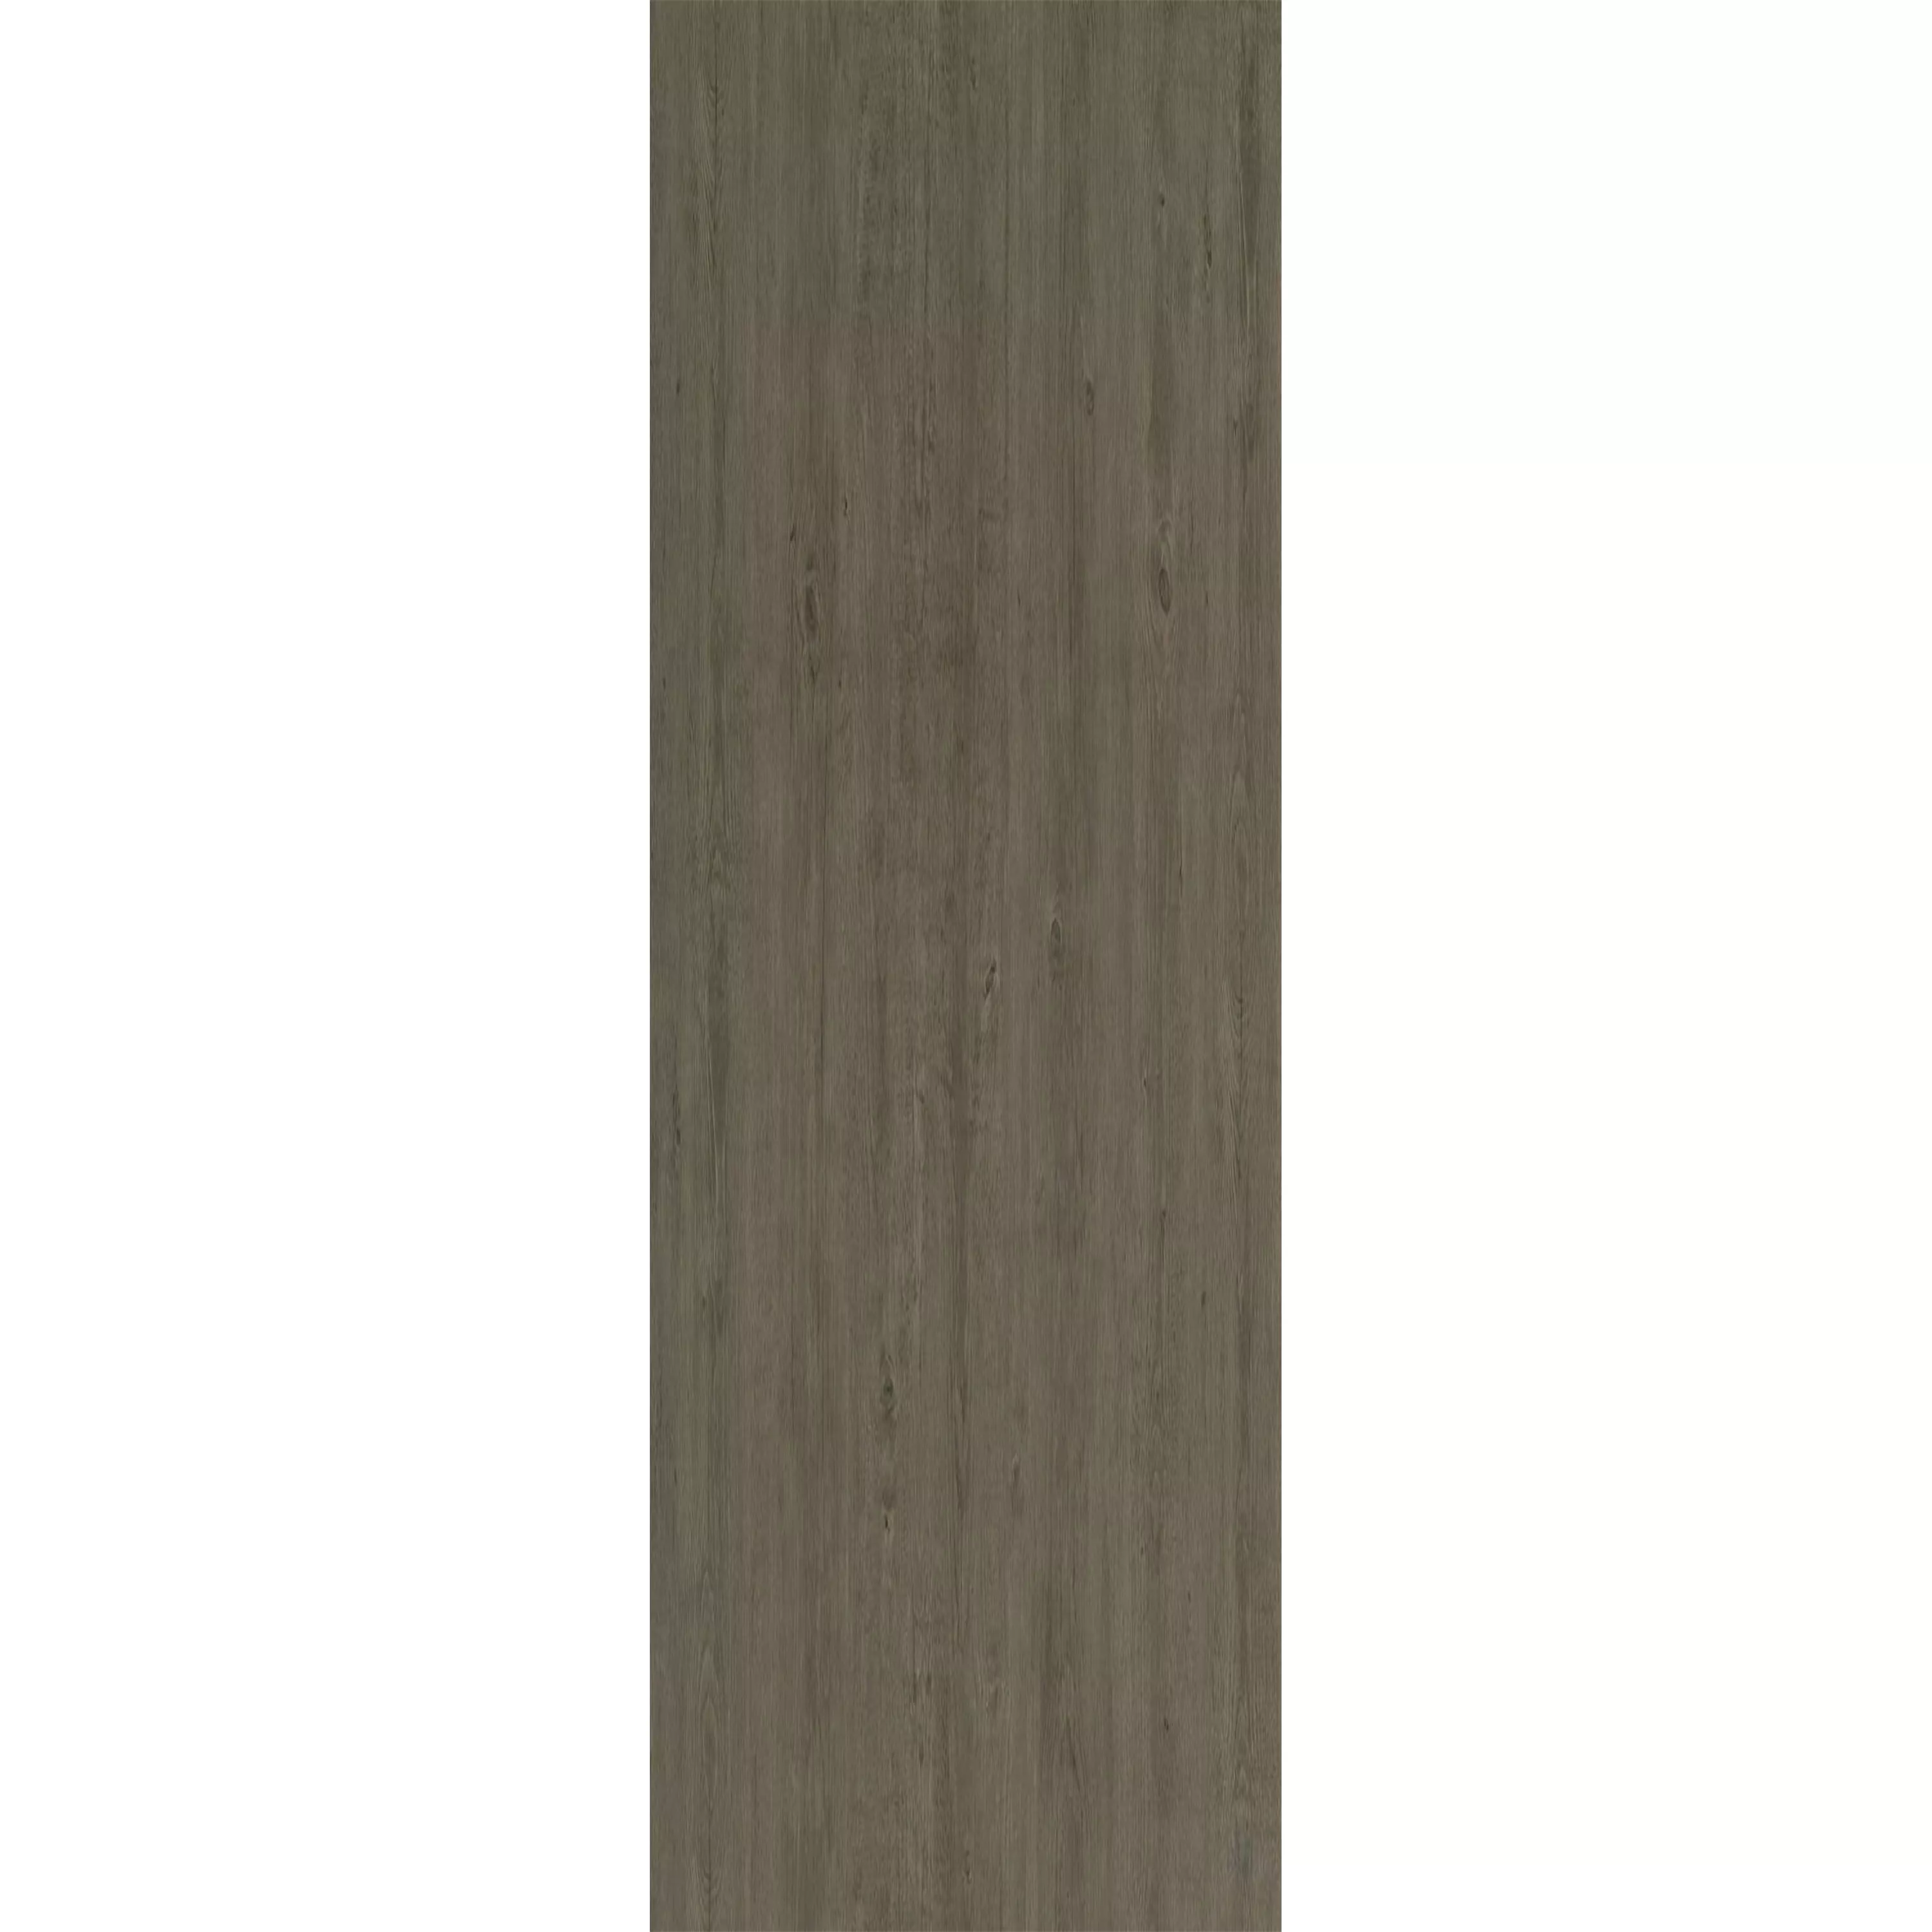 Vinyl Gulvfliser Klik System Woodford Taupe 17,2x121cm